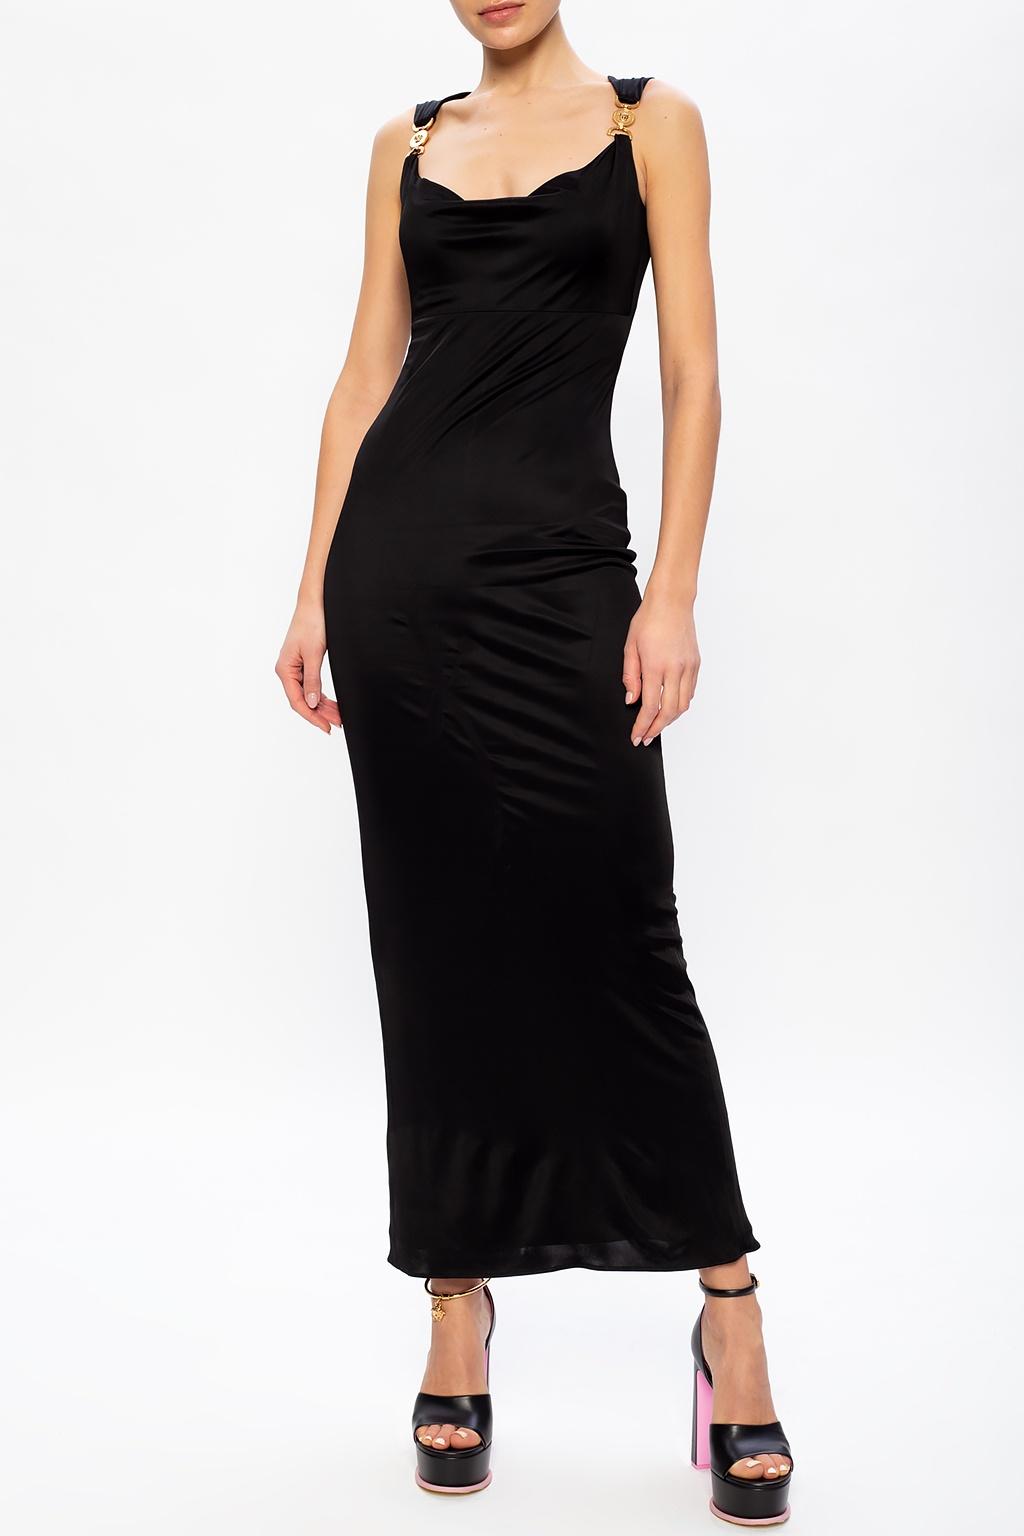 https://cdna.lystit.com/photos/vitkac/2dfa2fb5/versace-BLACK-Dress-With-Logo.jpeg